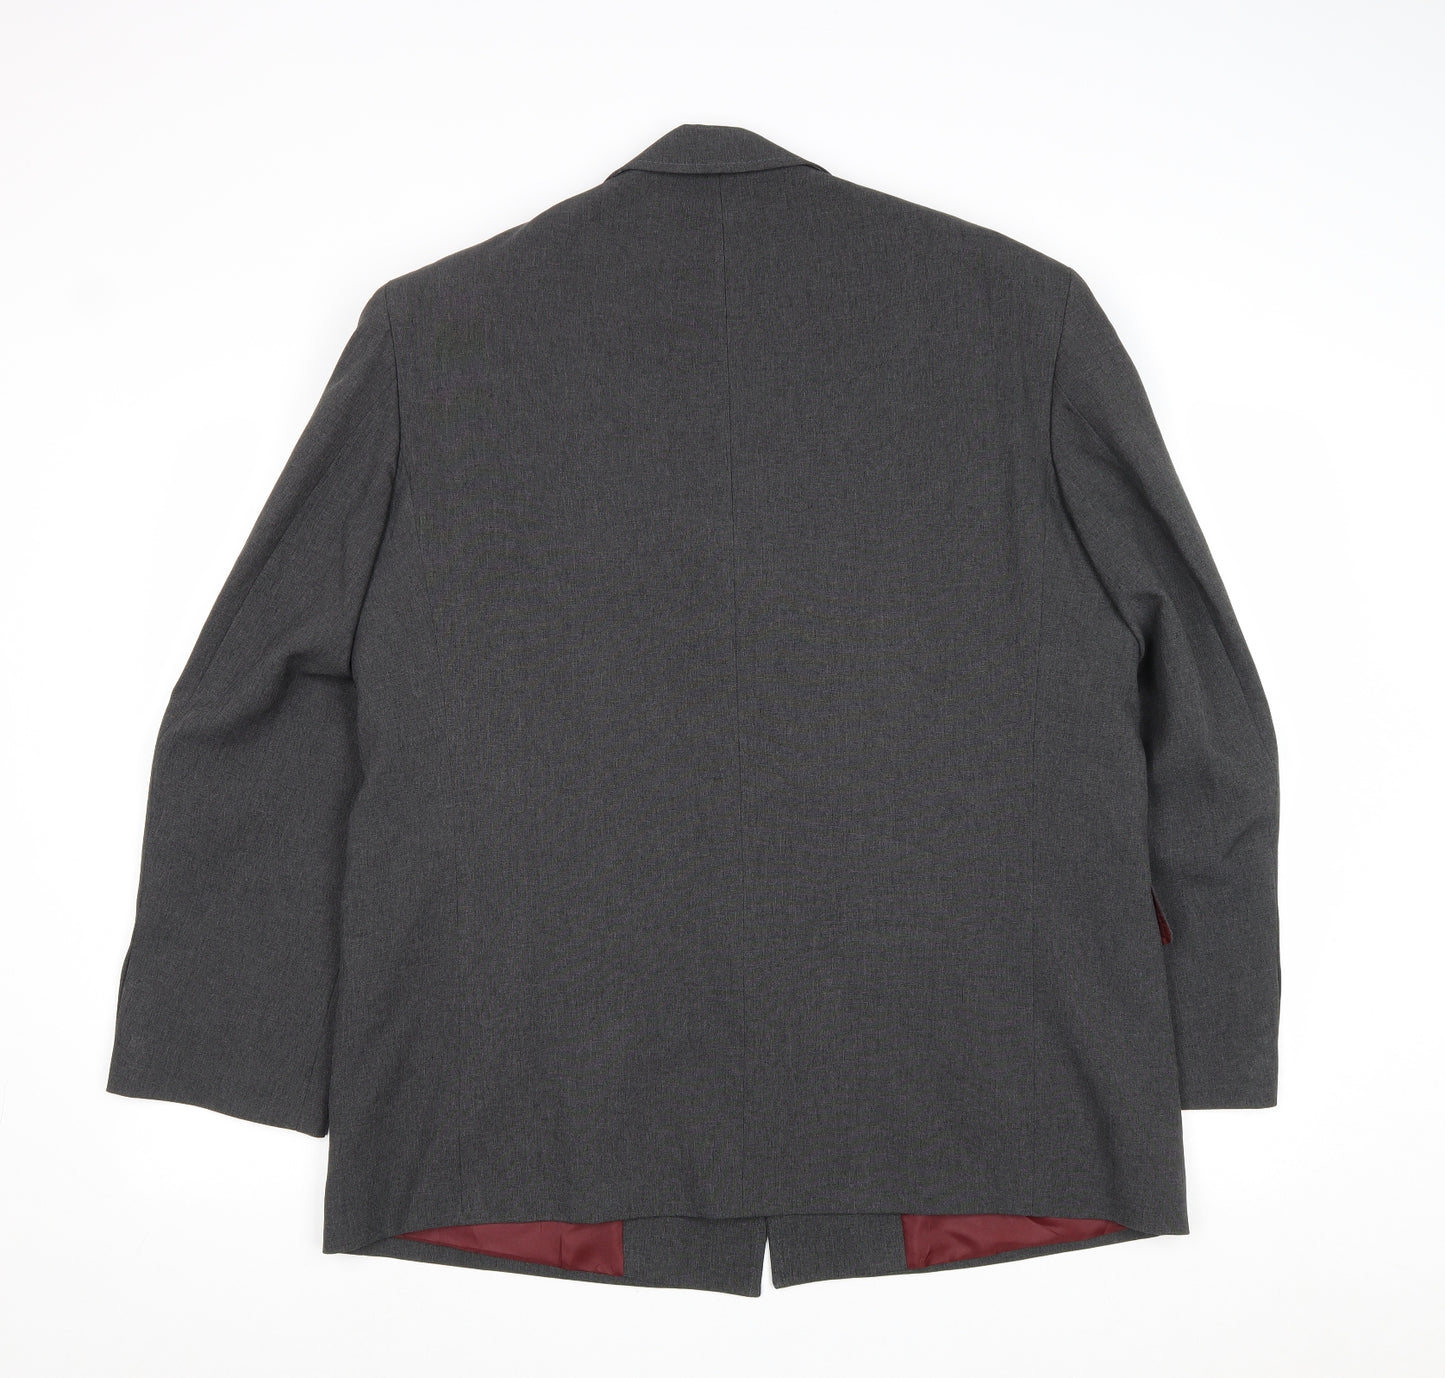 Douglas Mens Grey Polyester Jacket Blazer Size 44 Regular